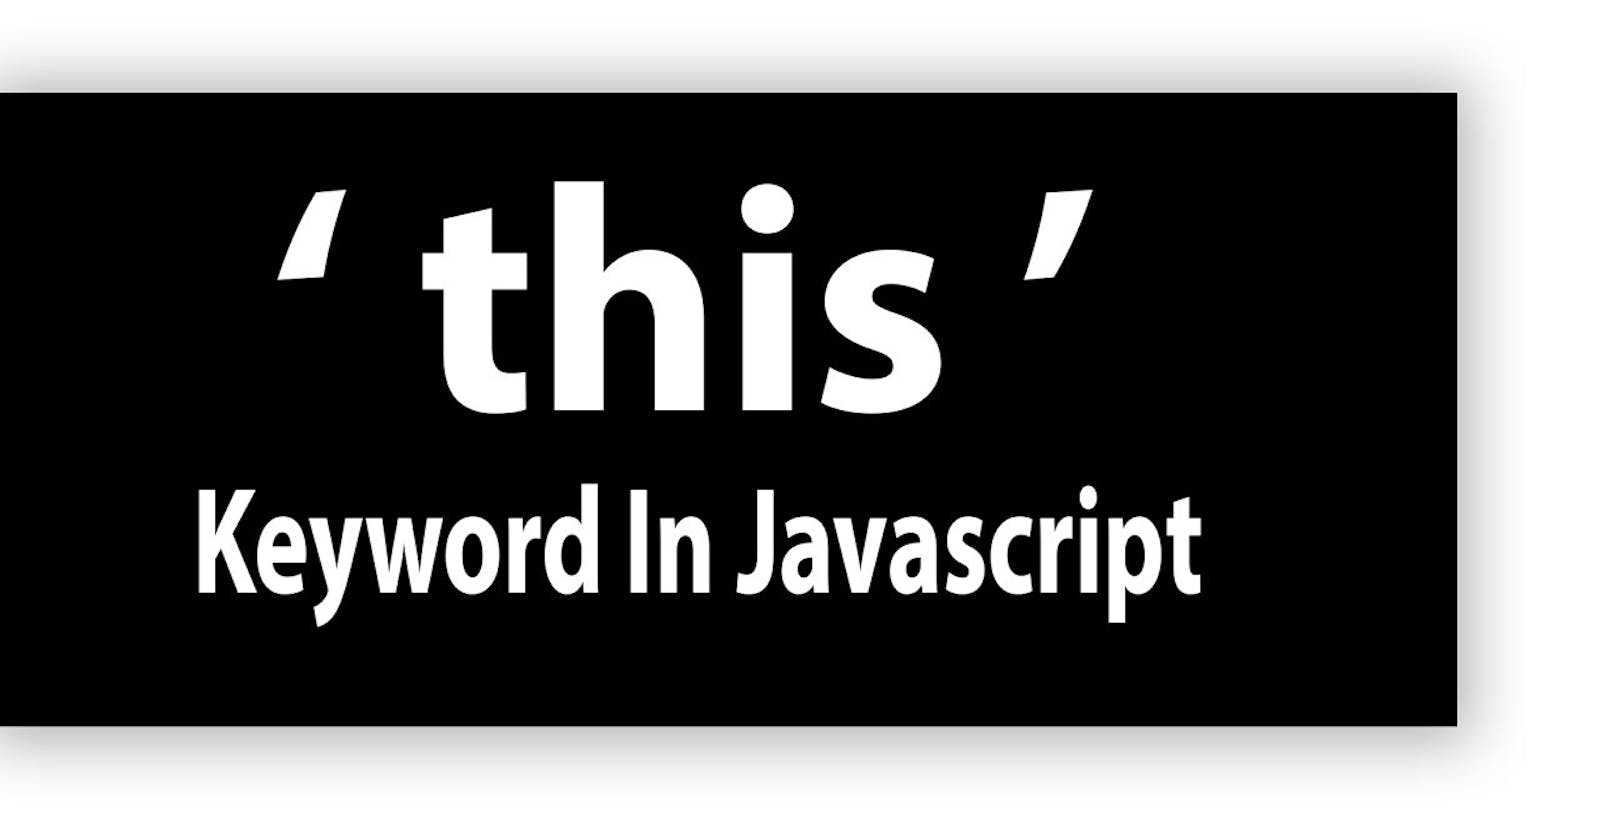 The JavaScript "this" keyword